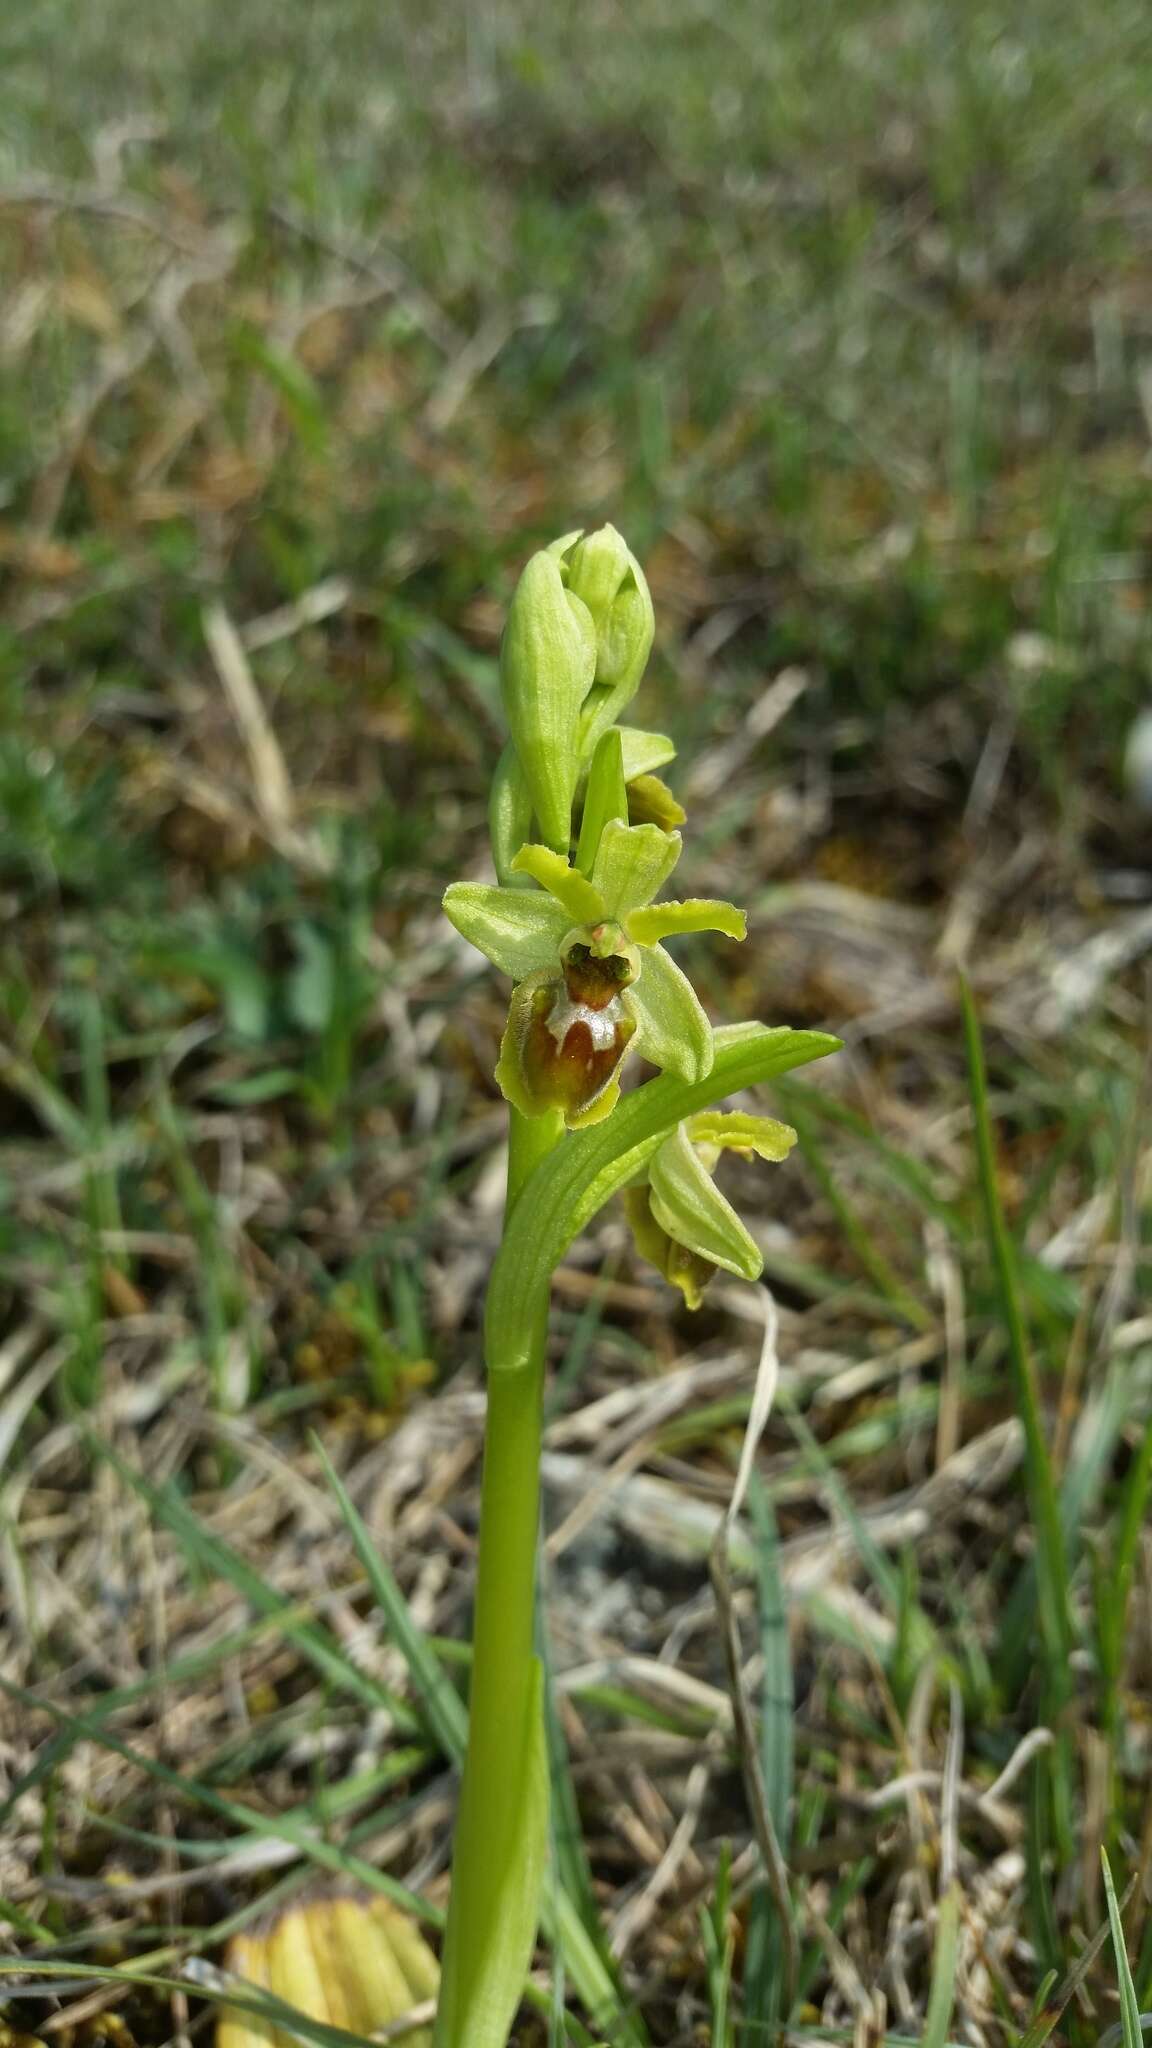 Image of Ophrys sphegodes subsp. araneola (Rchb.) M. Laínz